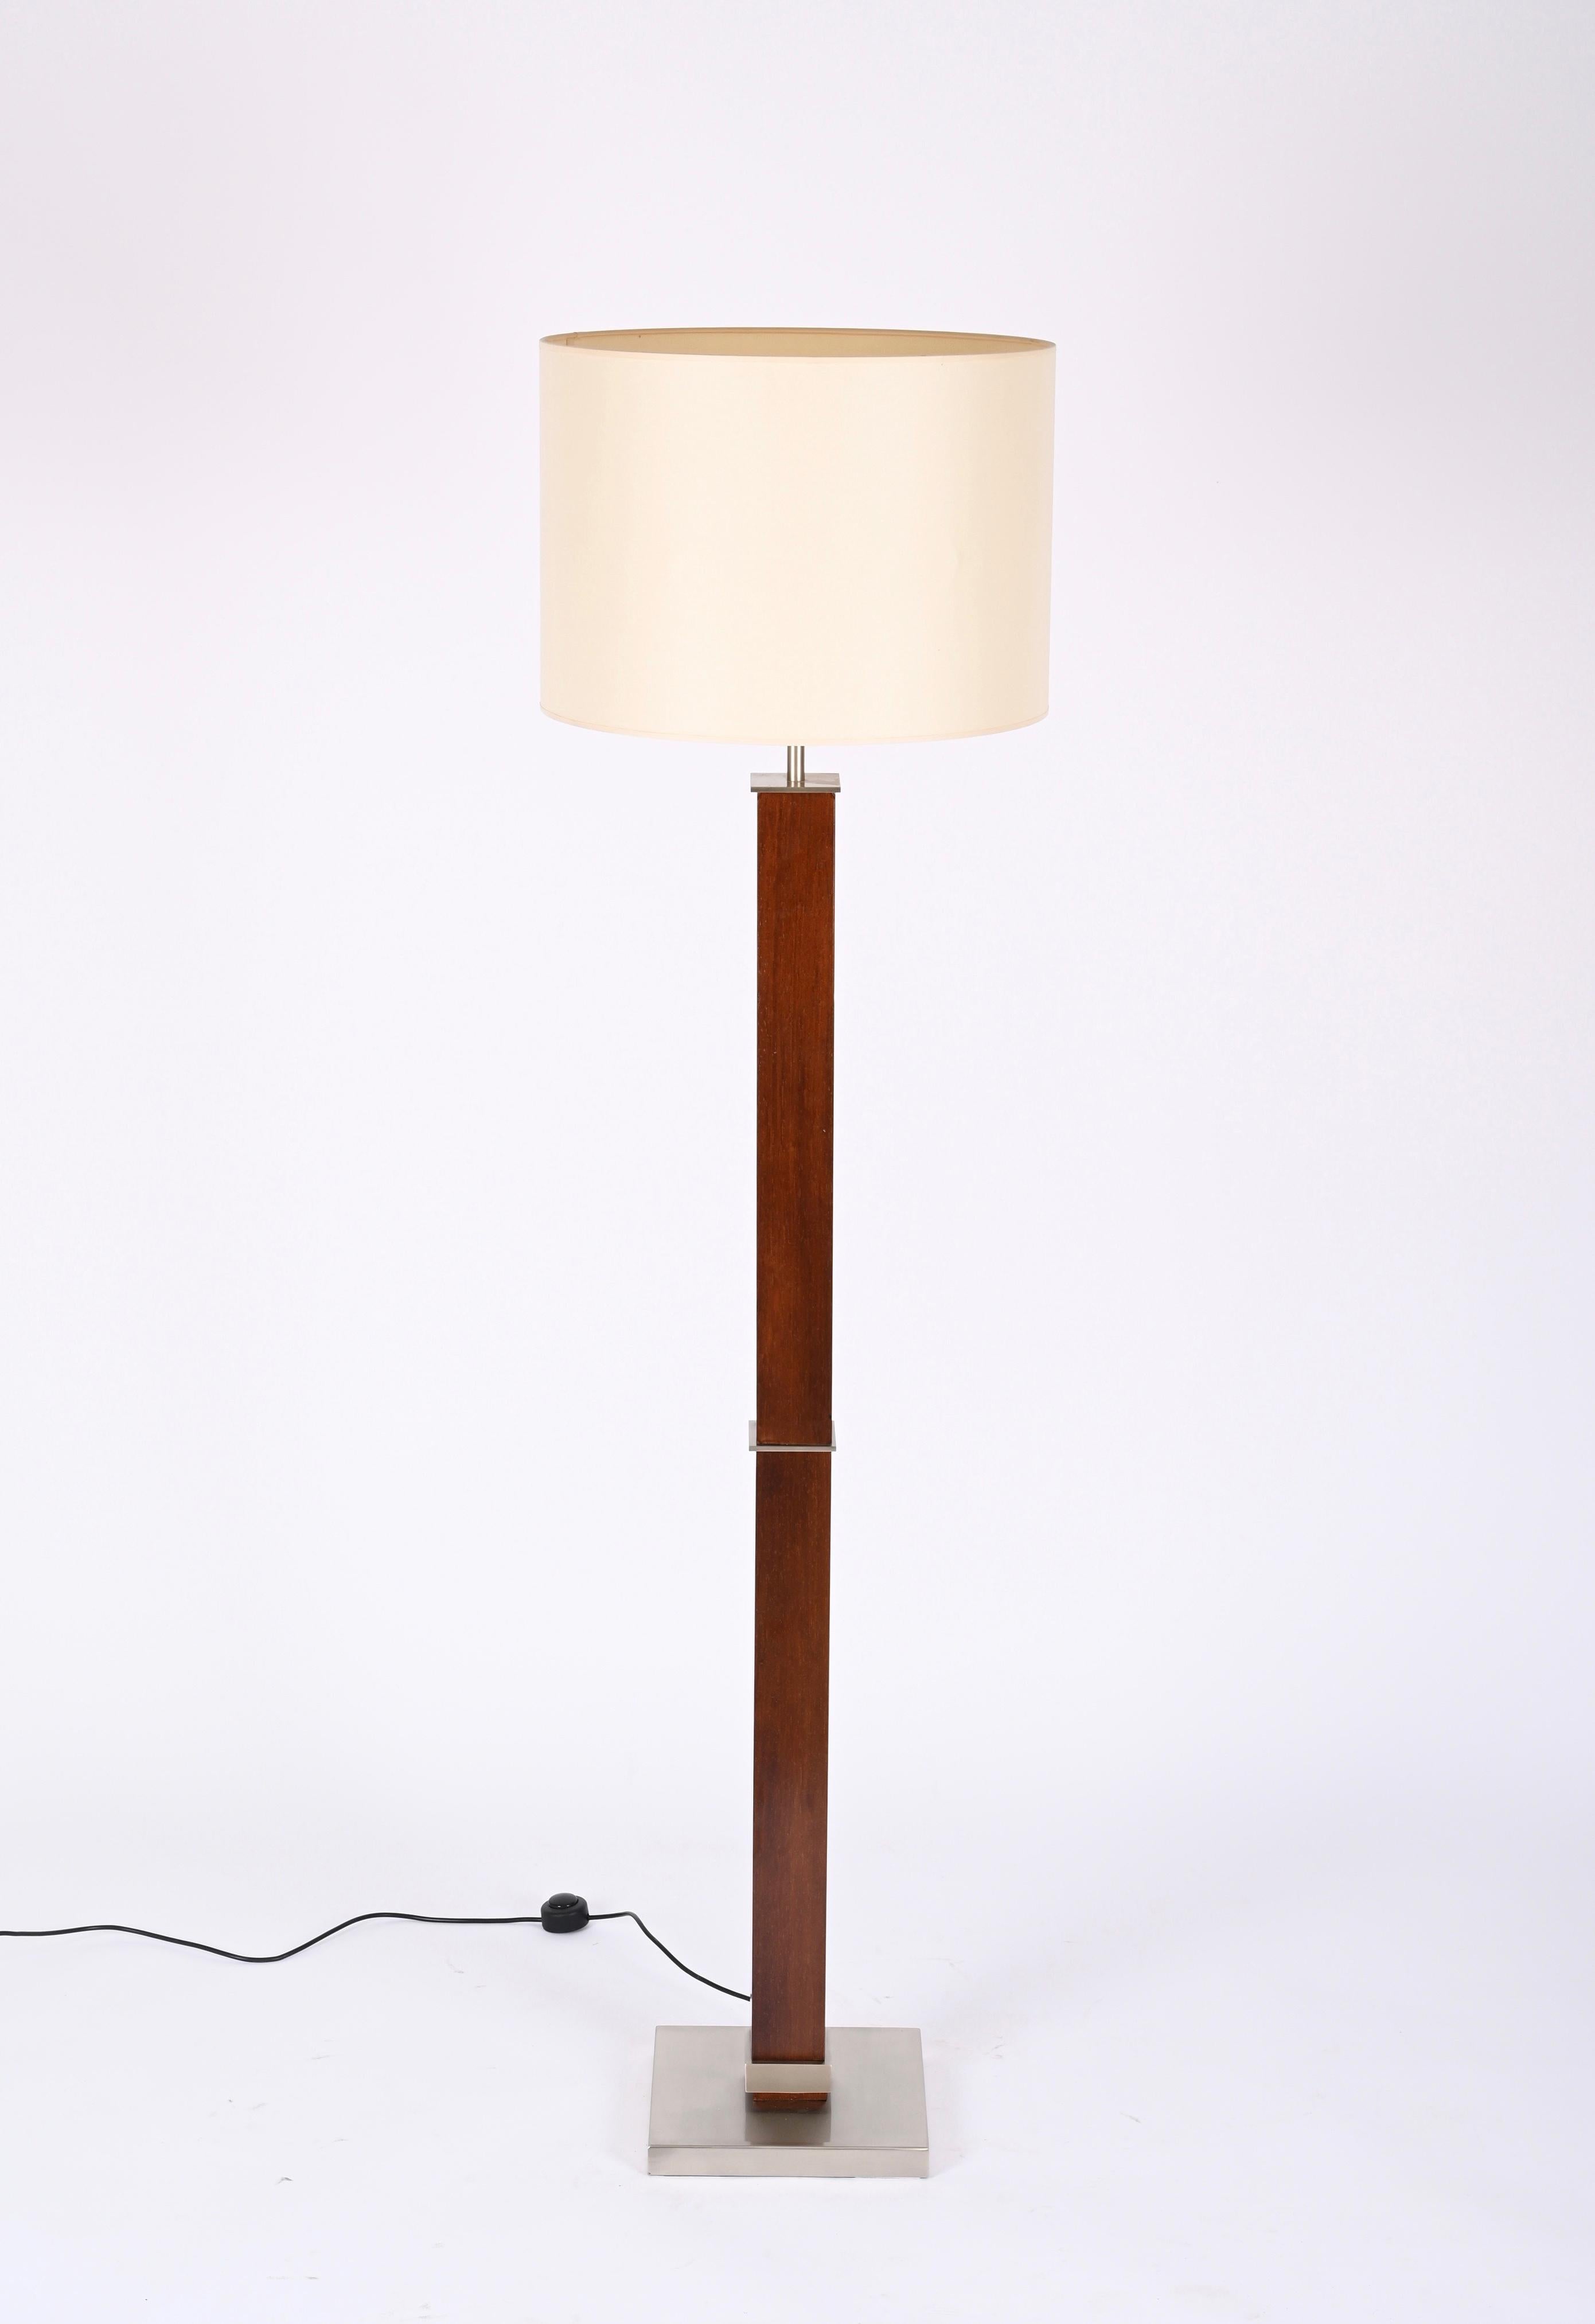 Zonca Voghera Minimal Midcentury Italian Wood and Steel Floor Lamp, 1980s For Sale 1